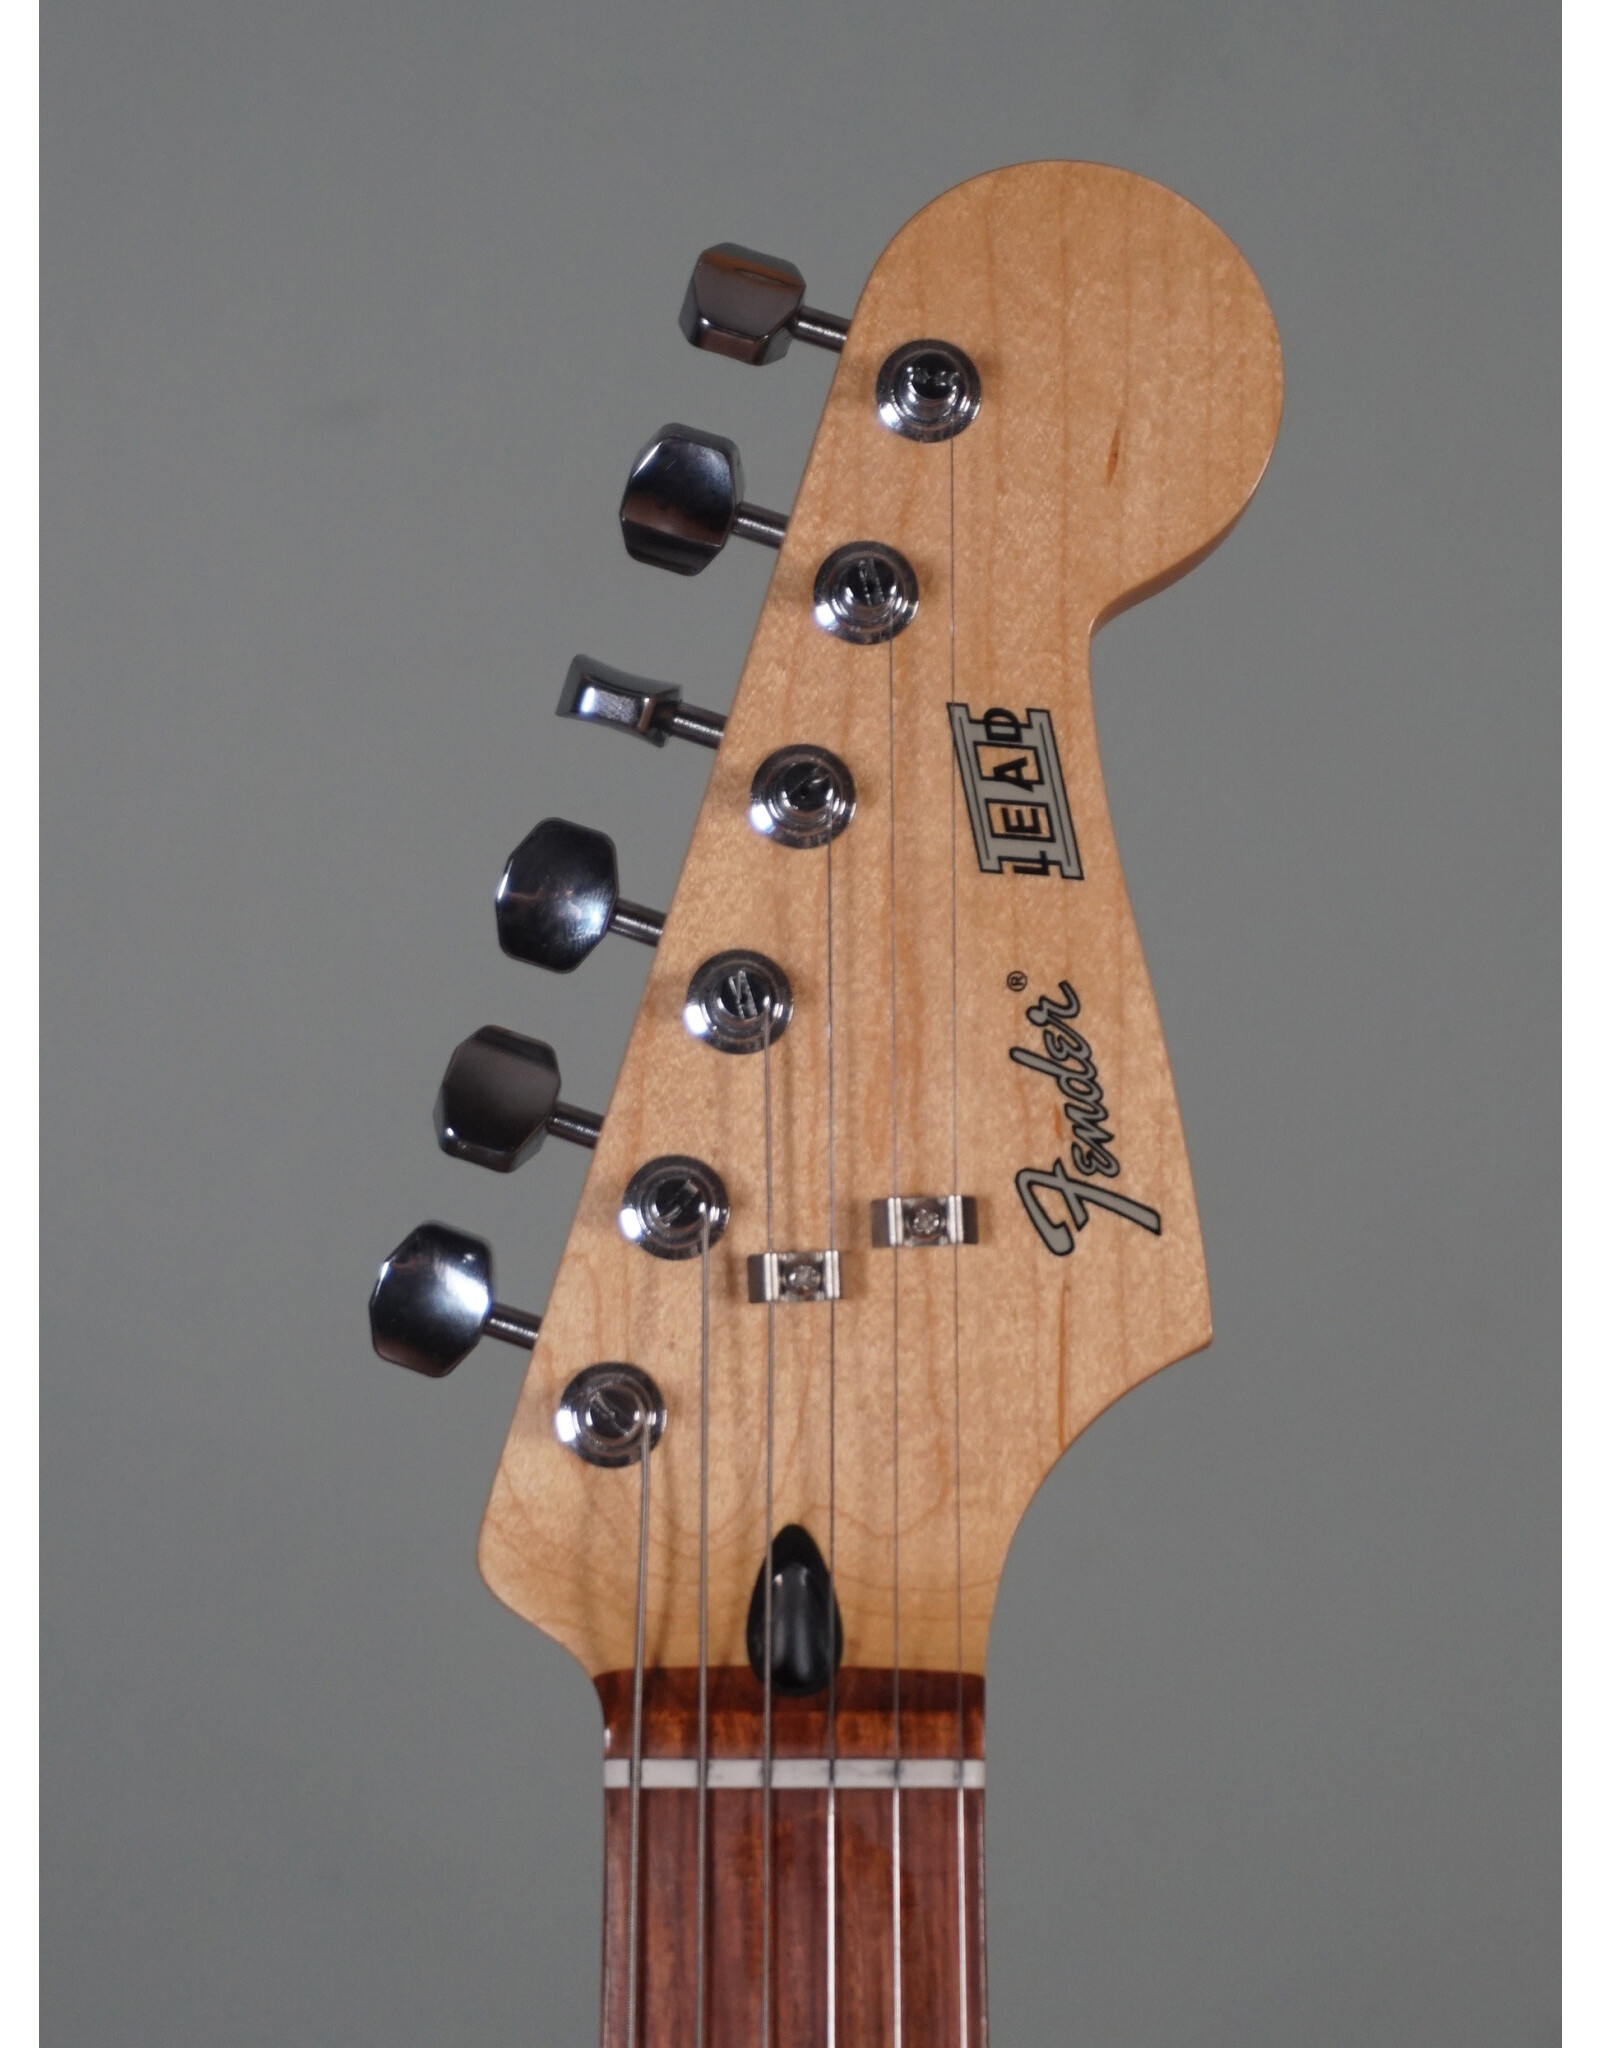 Fender Fender Lead III, Olympic White w/ HSC, Used